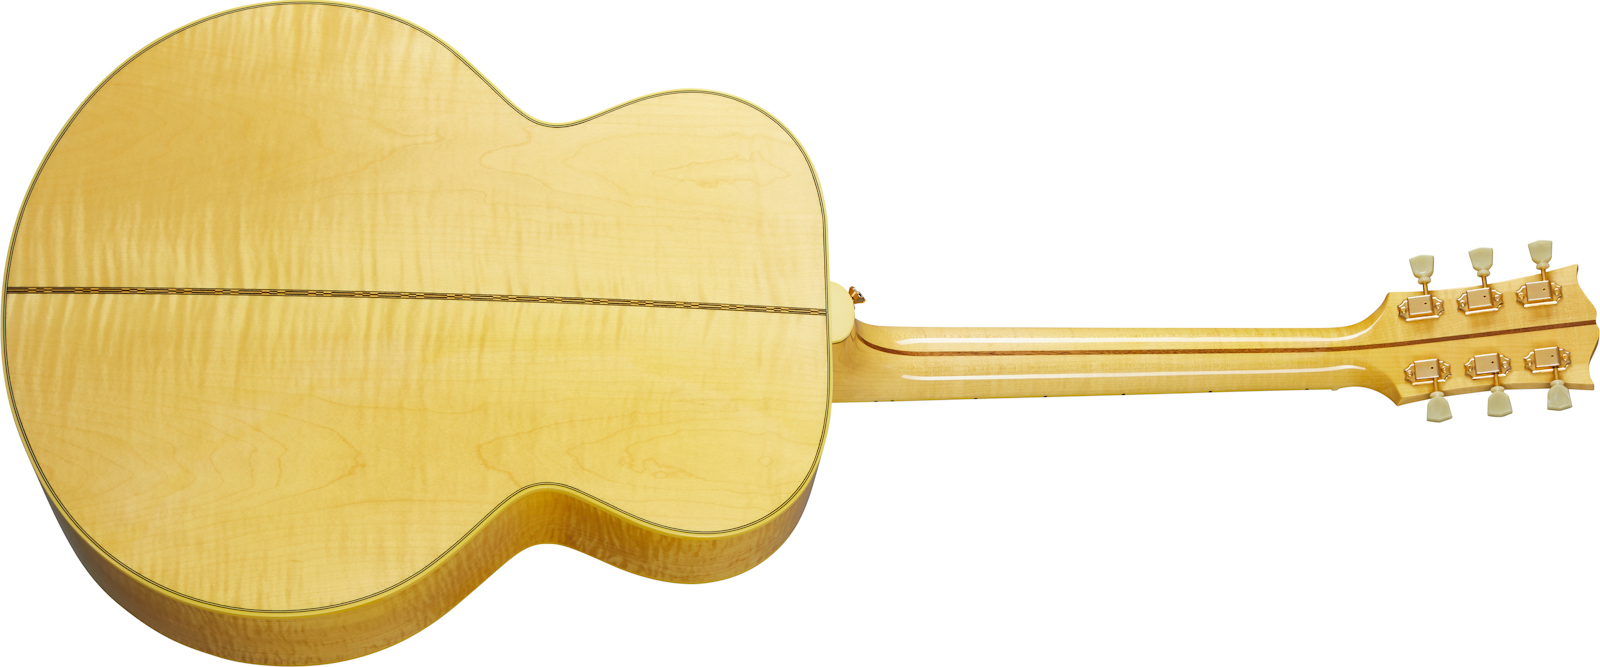 Gibson Sj-200 Original 2020 Super Jumbo Epicea Erable Rw - Antique Natural - Electro acoustic guitar - Variation 1